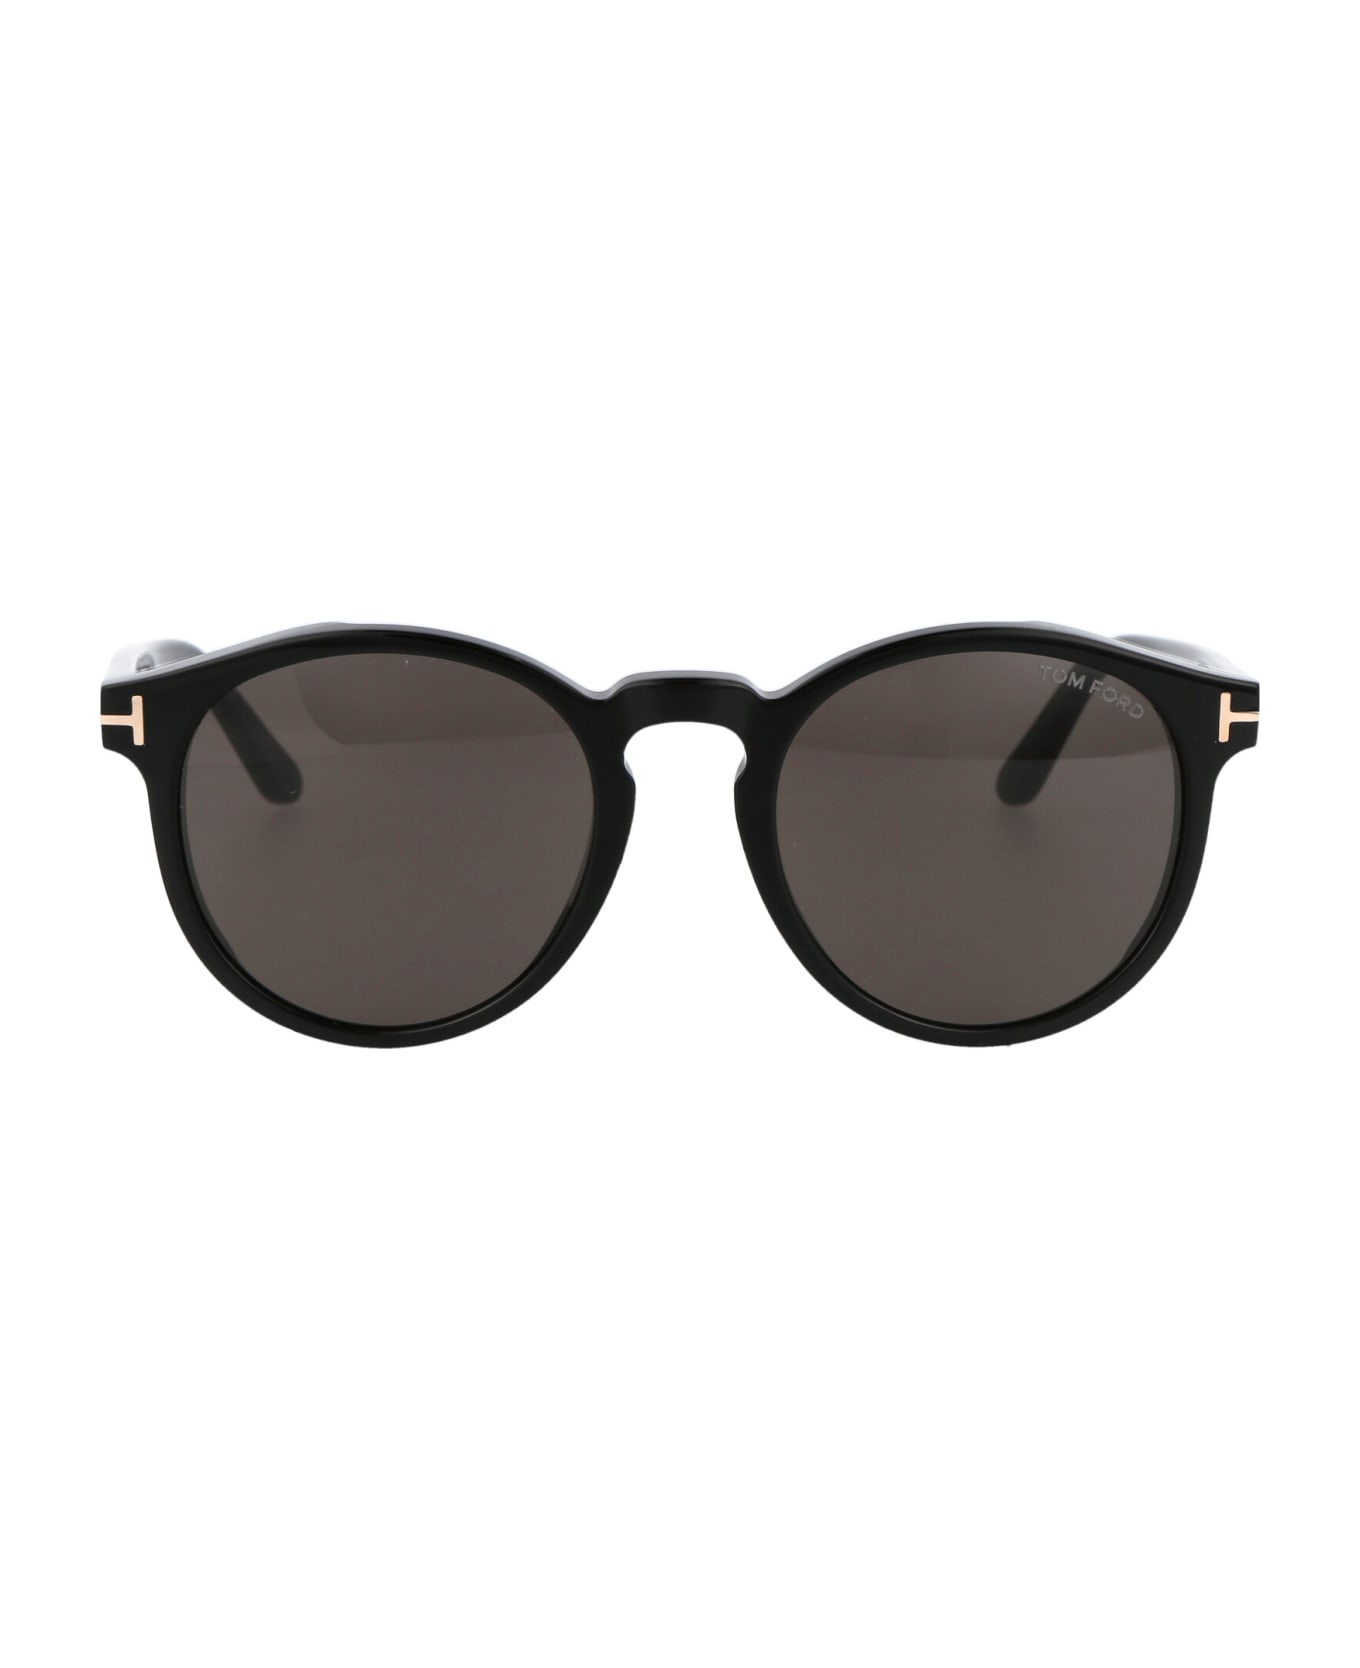 Tom Ford Eyewear Ian-02 Sunglasses - 01A Nero Lucido / Fumo